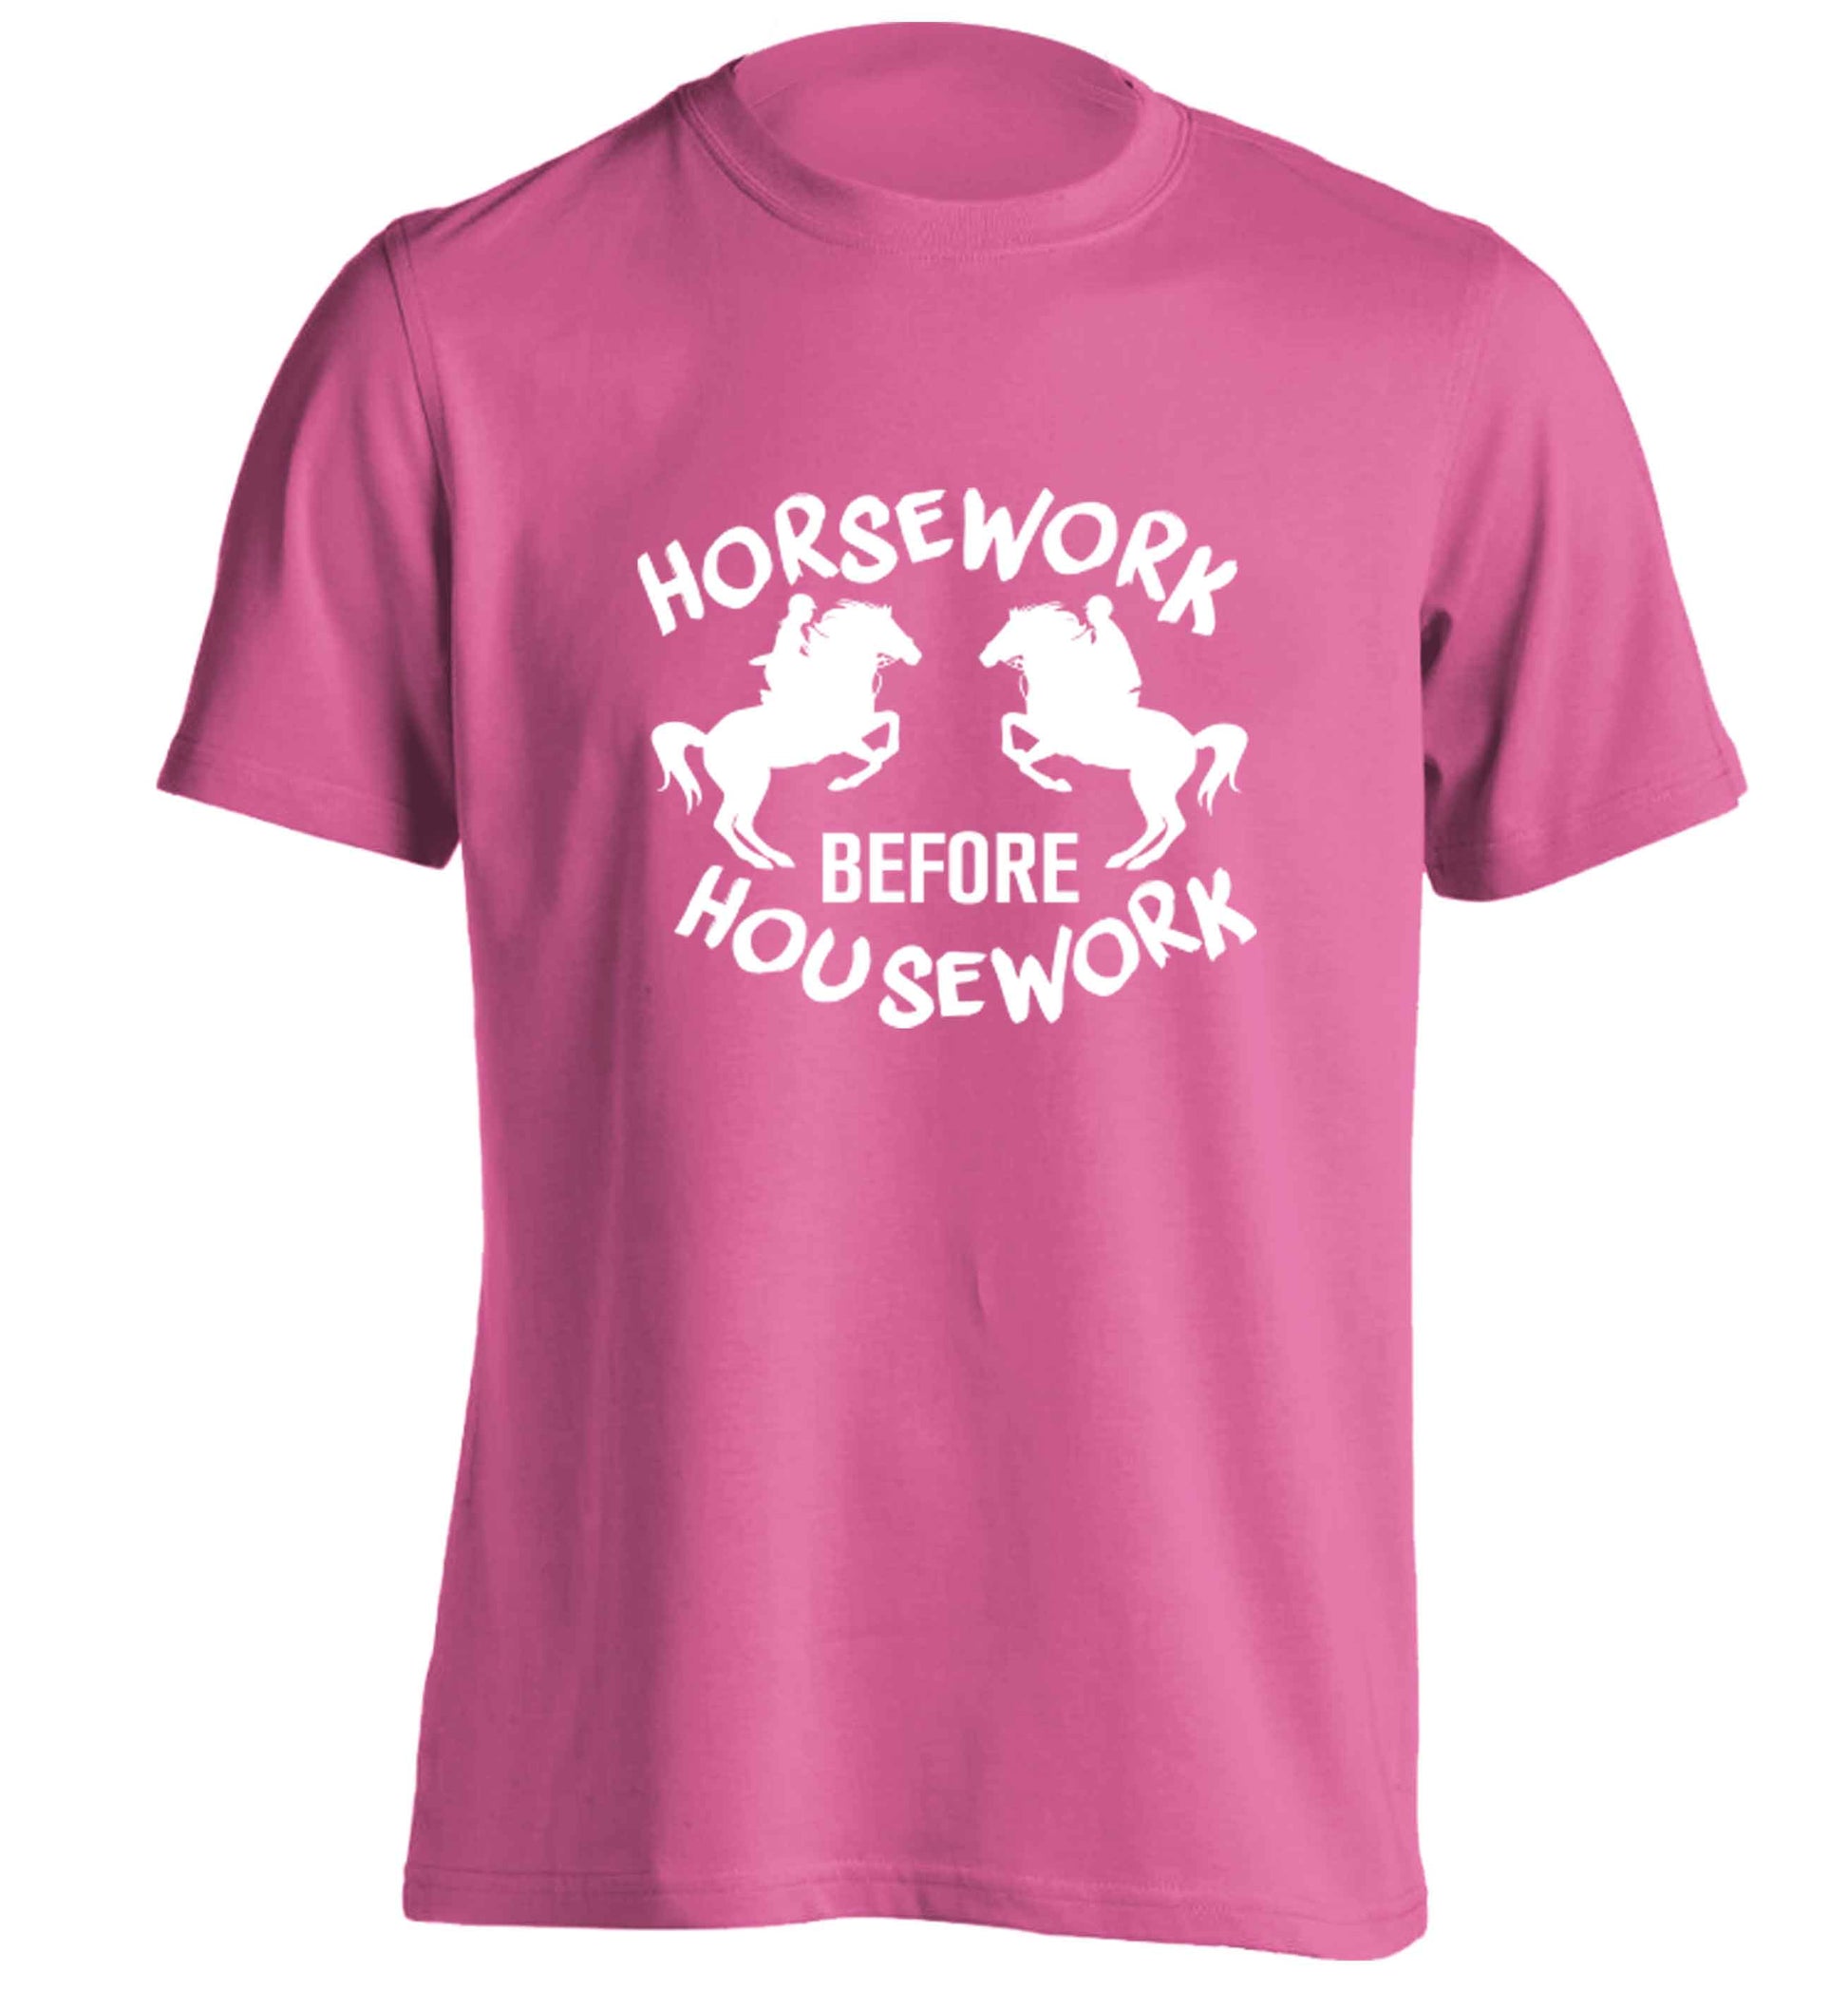 Horsework before housework adults unisex pink Tshirt 2XL